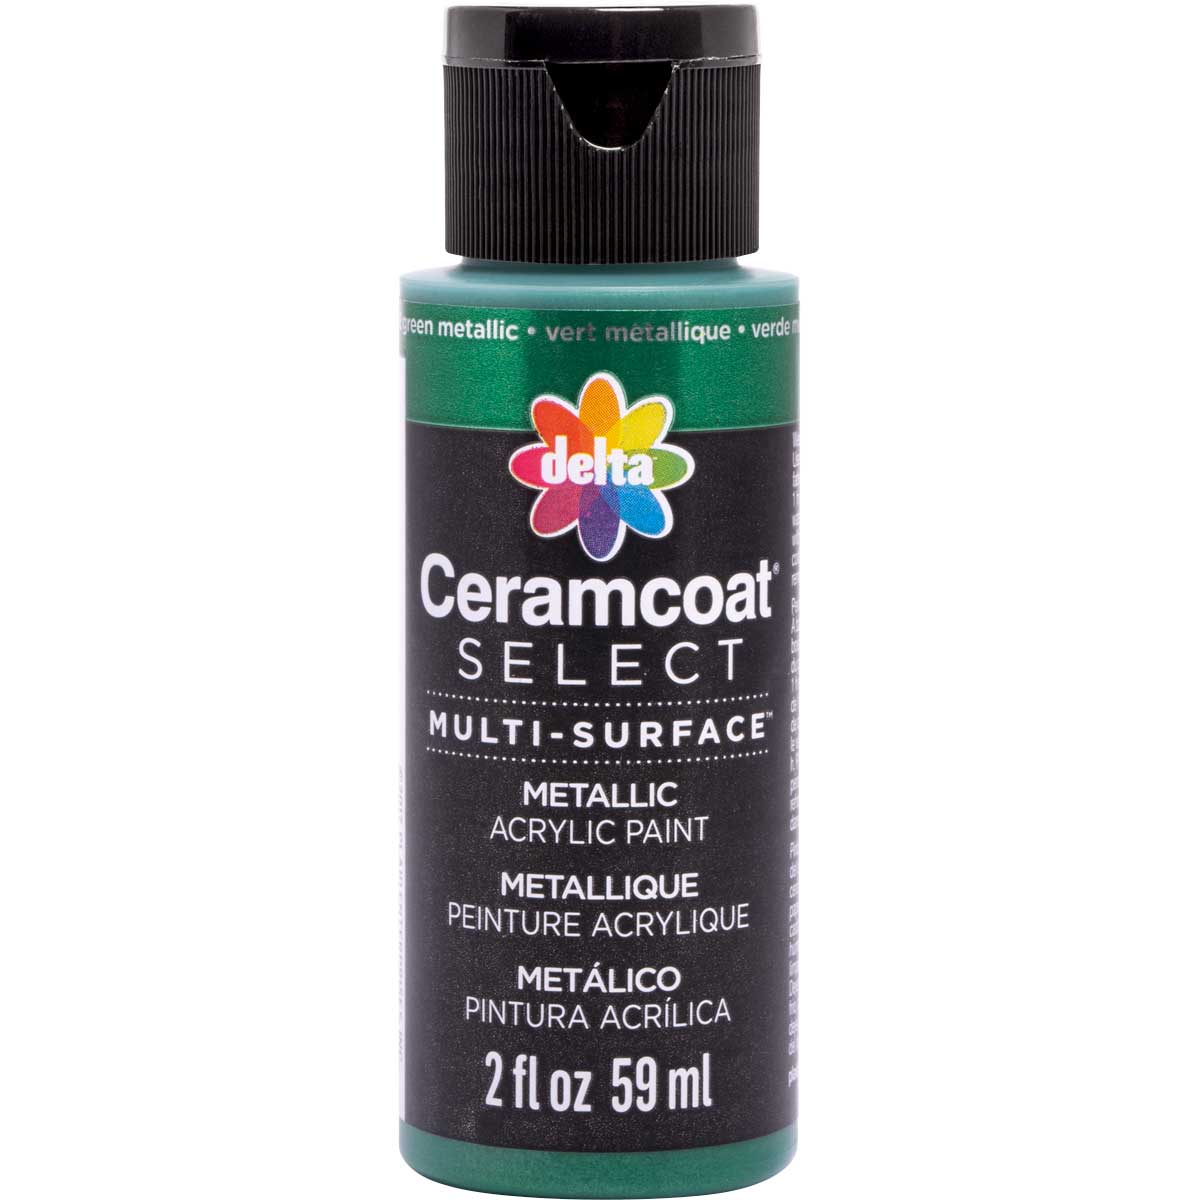 Delta Ceramcoat ® Select Multi-Surface Acrylic Paint - Metallic - Green, 2 oz. - 04102